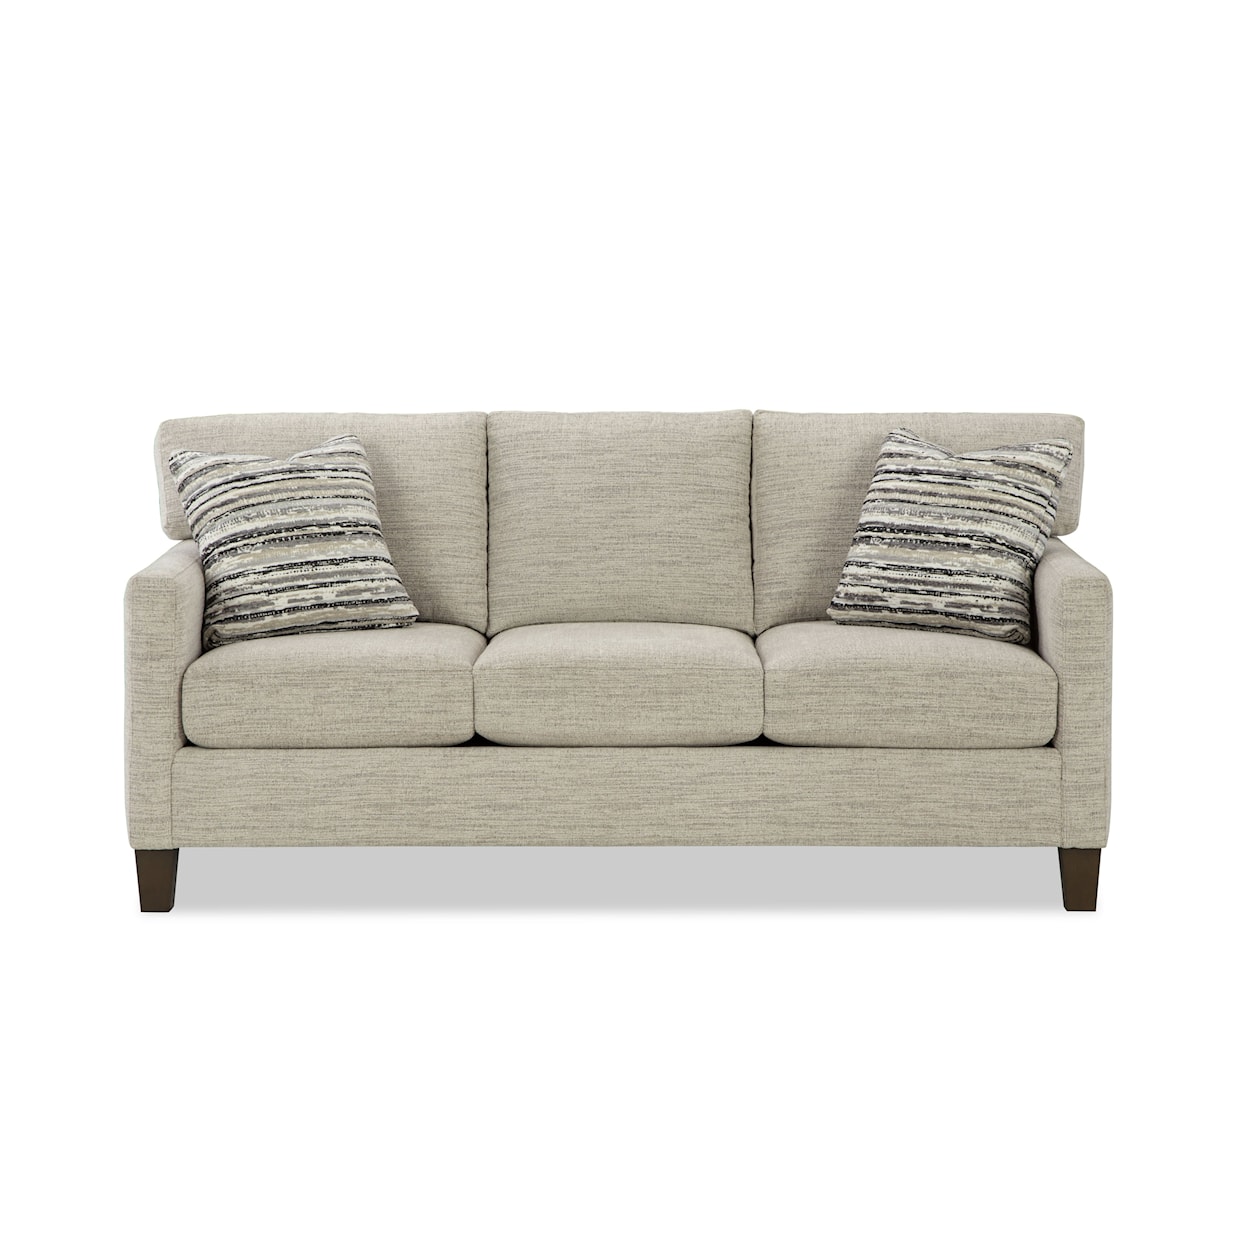 Craftmaster M9 Custom - Design Options 3-Seat Sofa